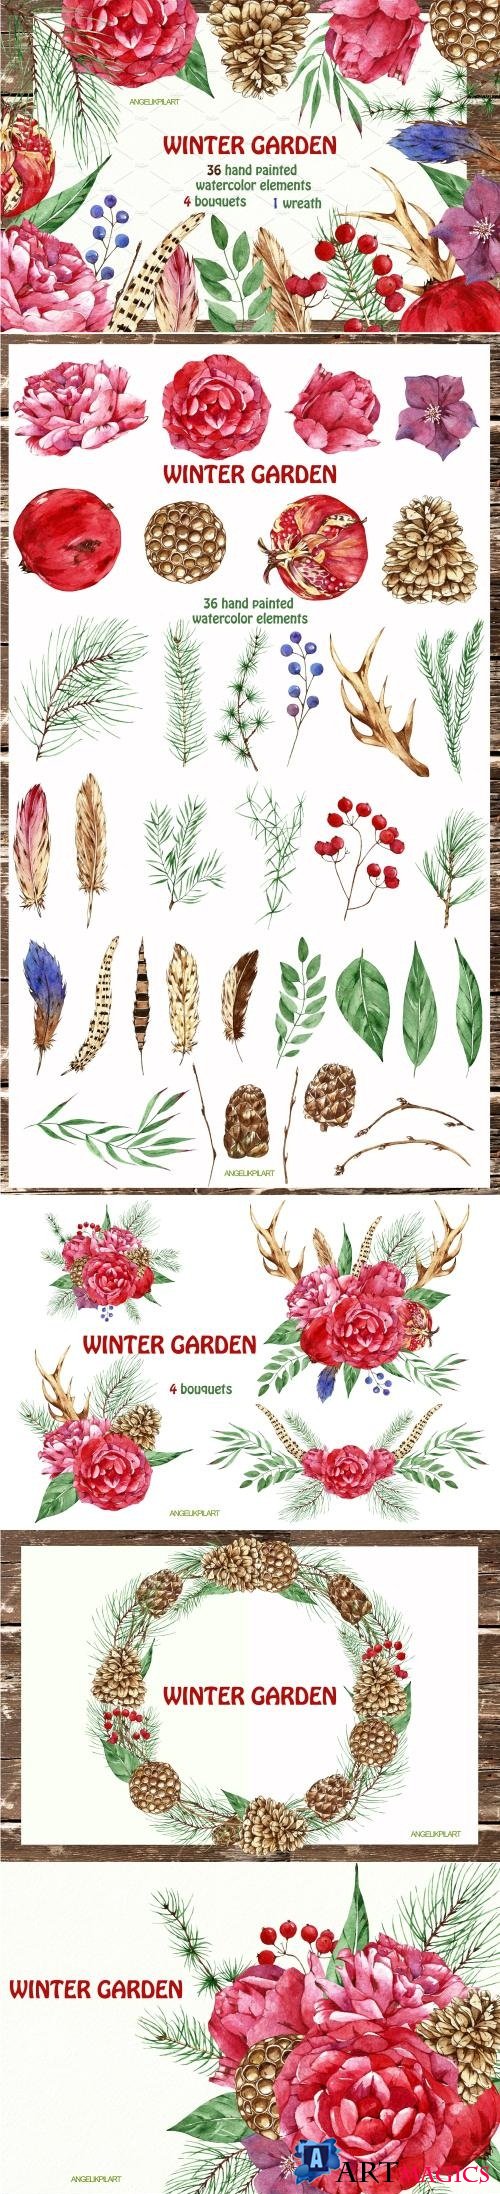 Watercolor set winter garden 2149826